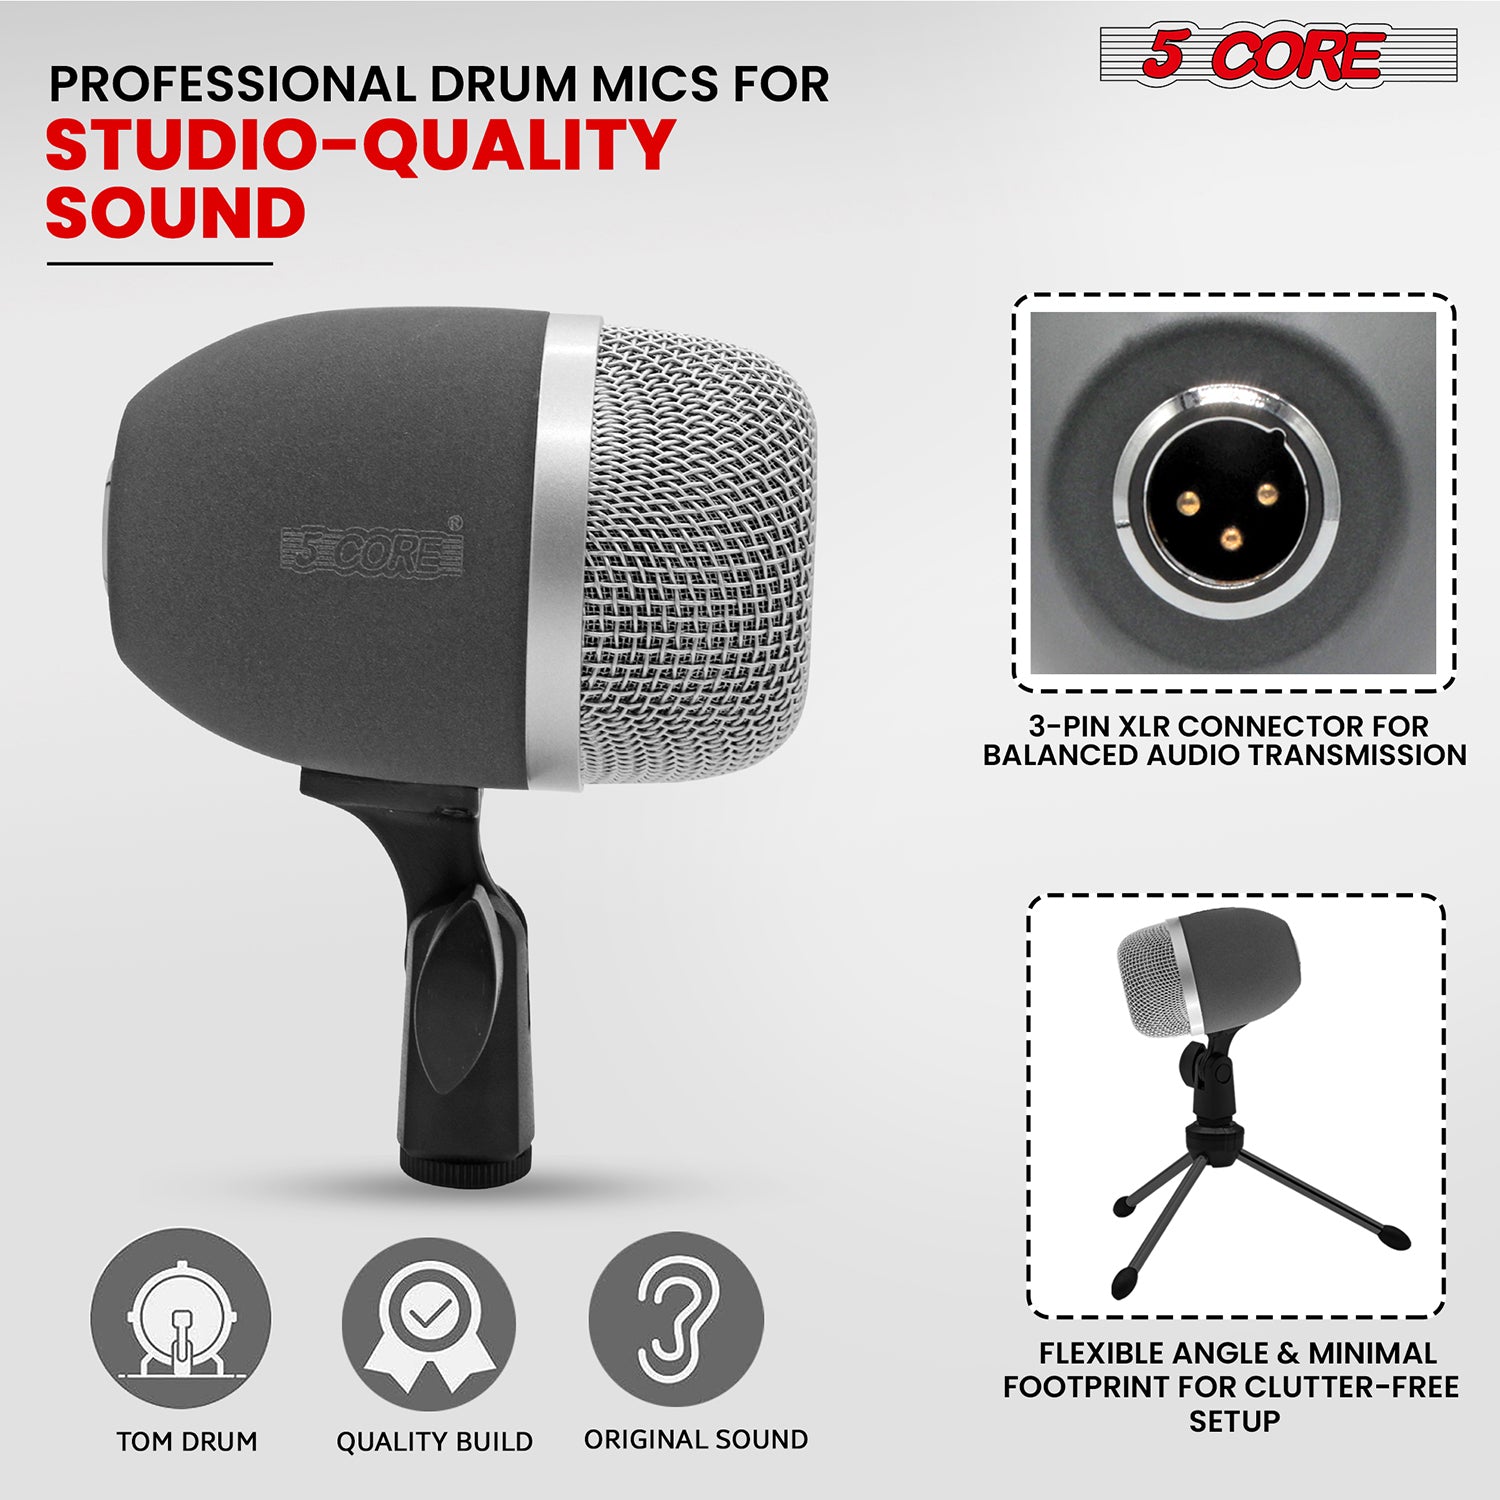 5 Core Conga Mic Snare Tom Microphone Drum Kit Condenser XLR Instrument Mics